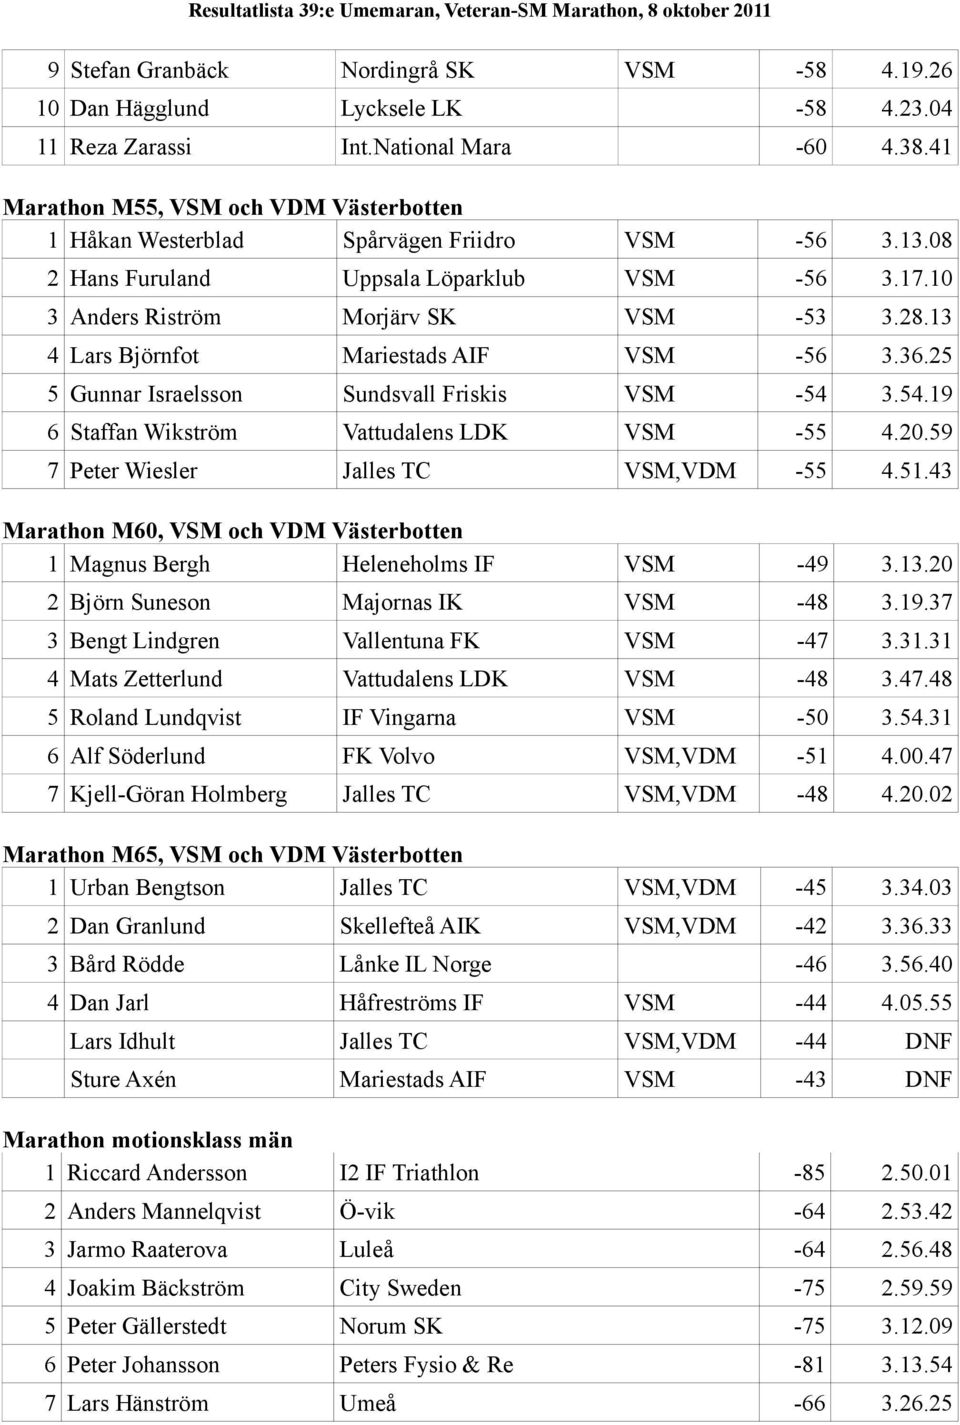 13 4 Lars Björnfot Mariestads AIF VSM -56 3.36.25 5 Gunnar Israelsson Sundsvall Friskis VSM -54 3.54.19 6 Staffan Wikström Vattudalens LDK VSM -55 4.20.59 7 Peter Wiesler Jalles TC VSM,VDM -55 4.51.